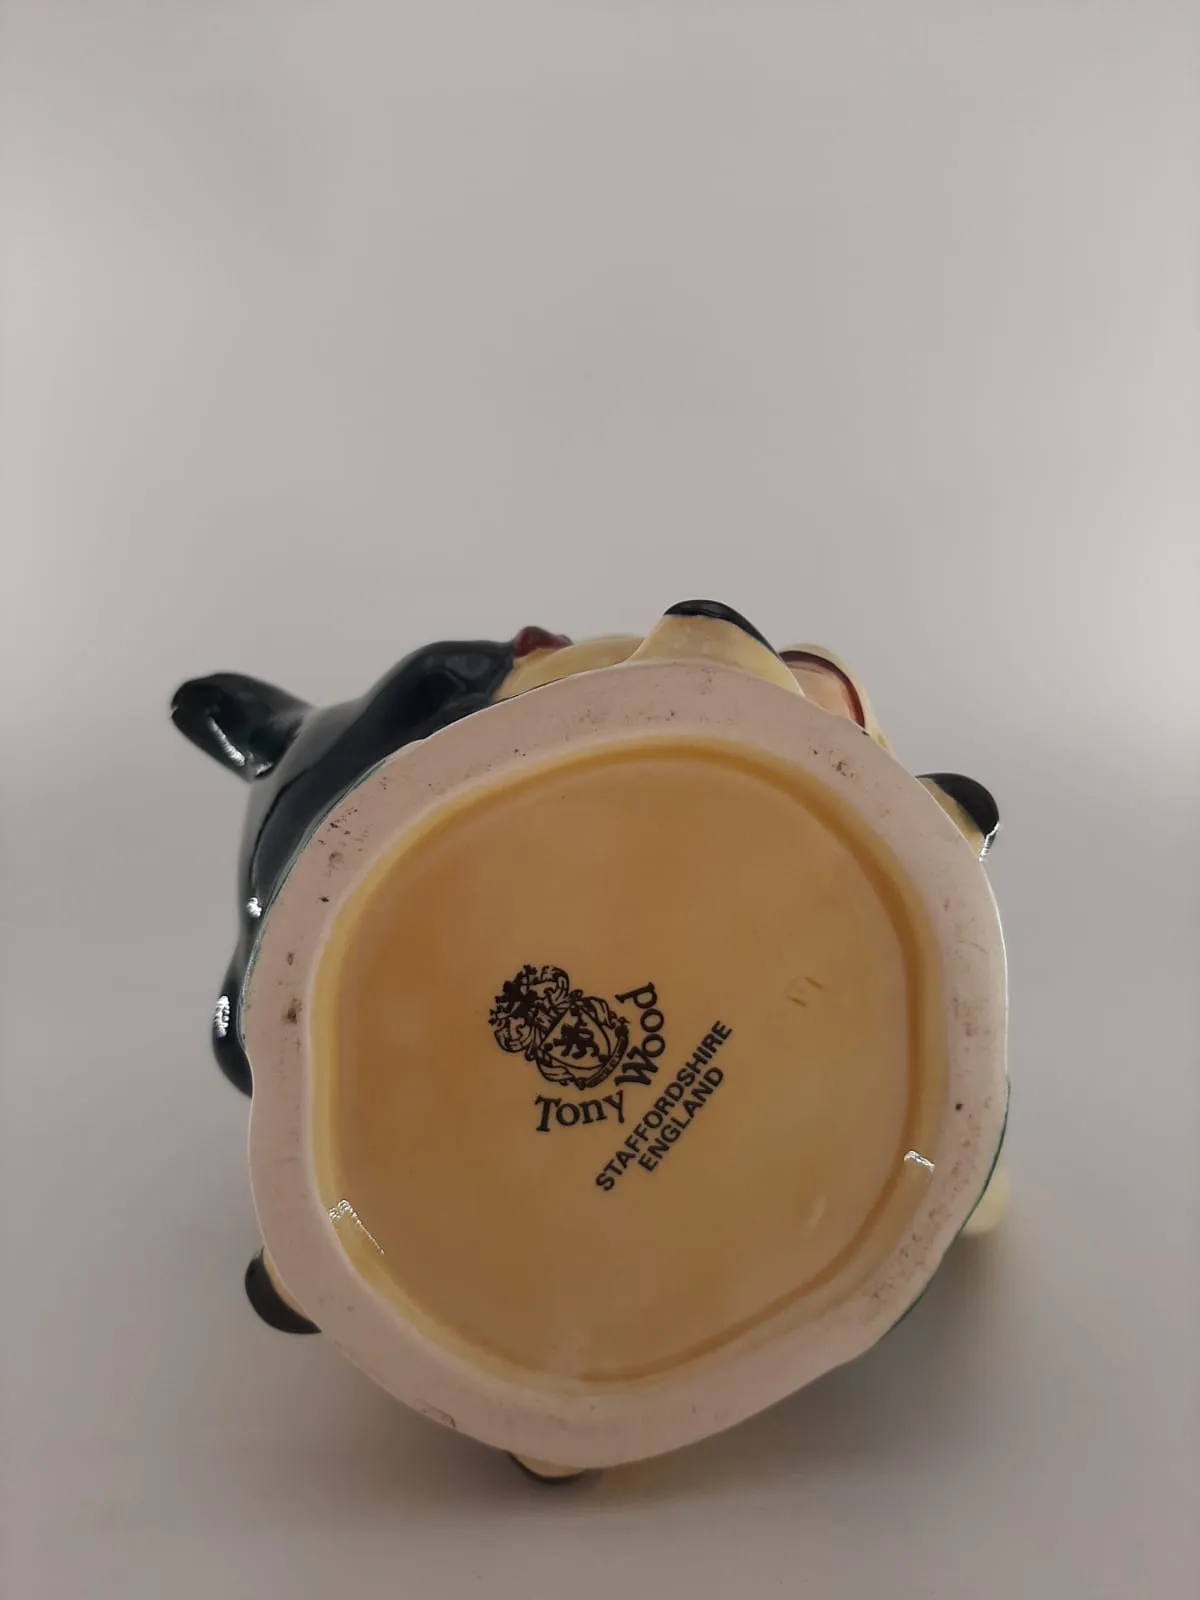 Unusual Toby Staffordshire Teapot